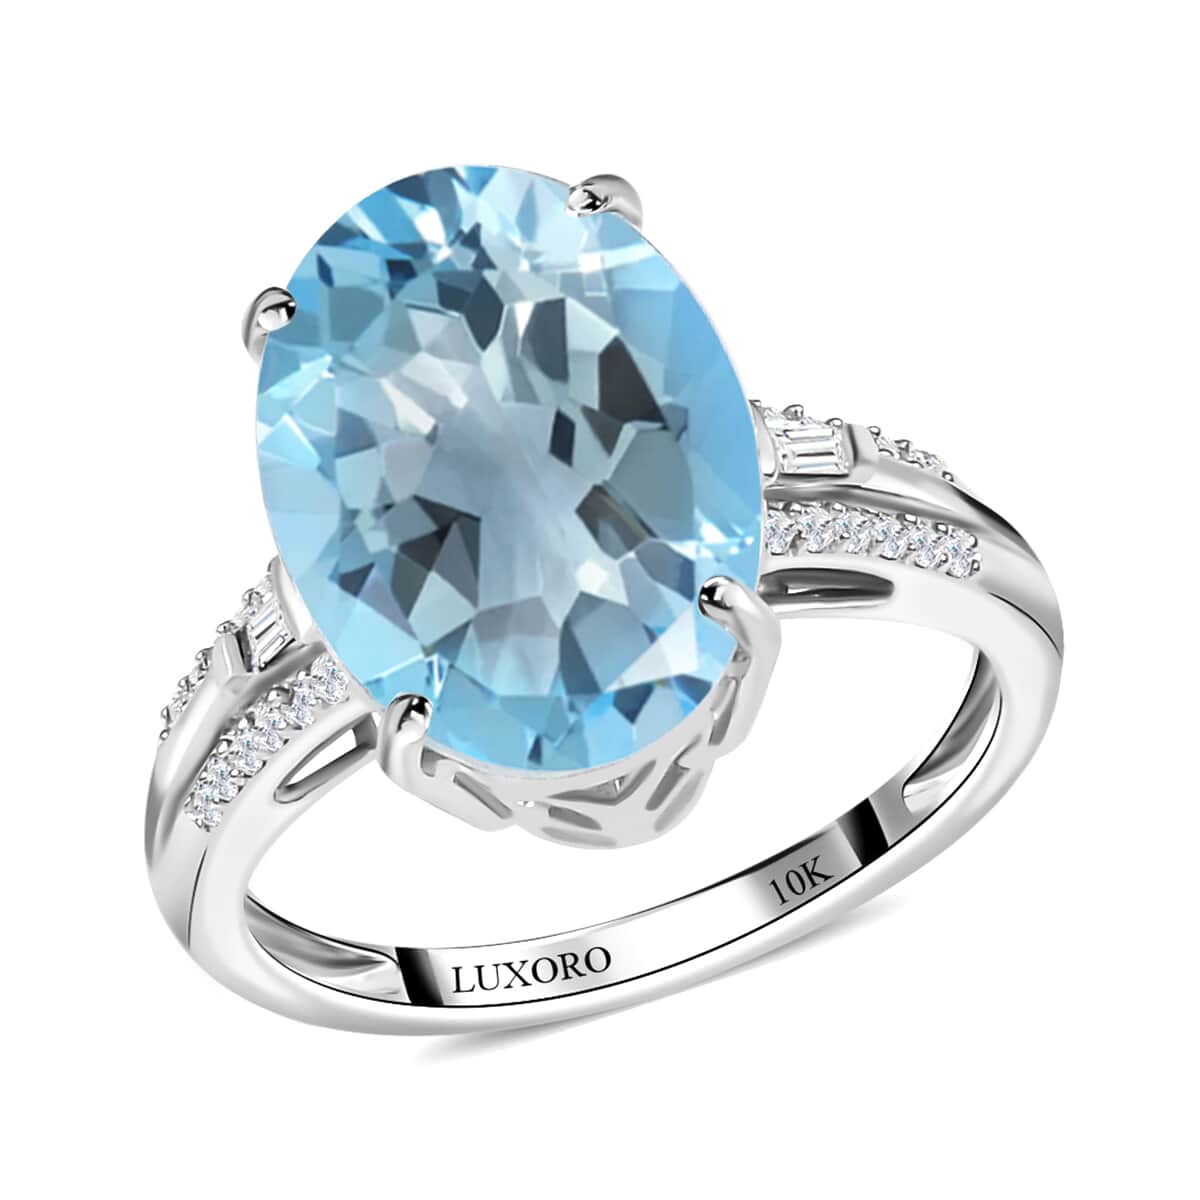 Luxoro 10K White Gold Premium Mangoro Aquamarine, Diamond (G-H, I3) Ring (Size 10.0) 5.15 ctw image number 0